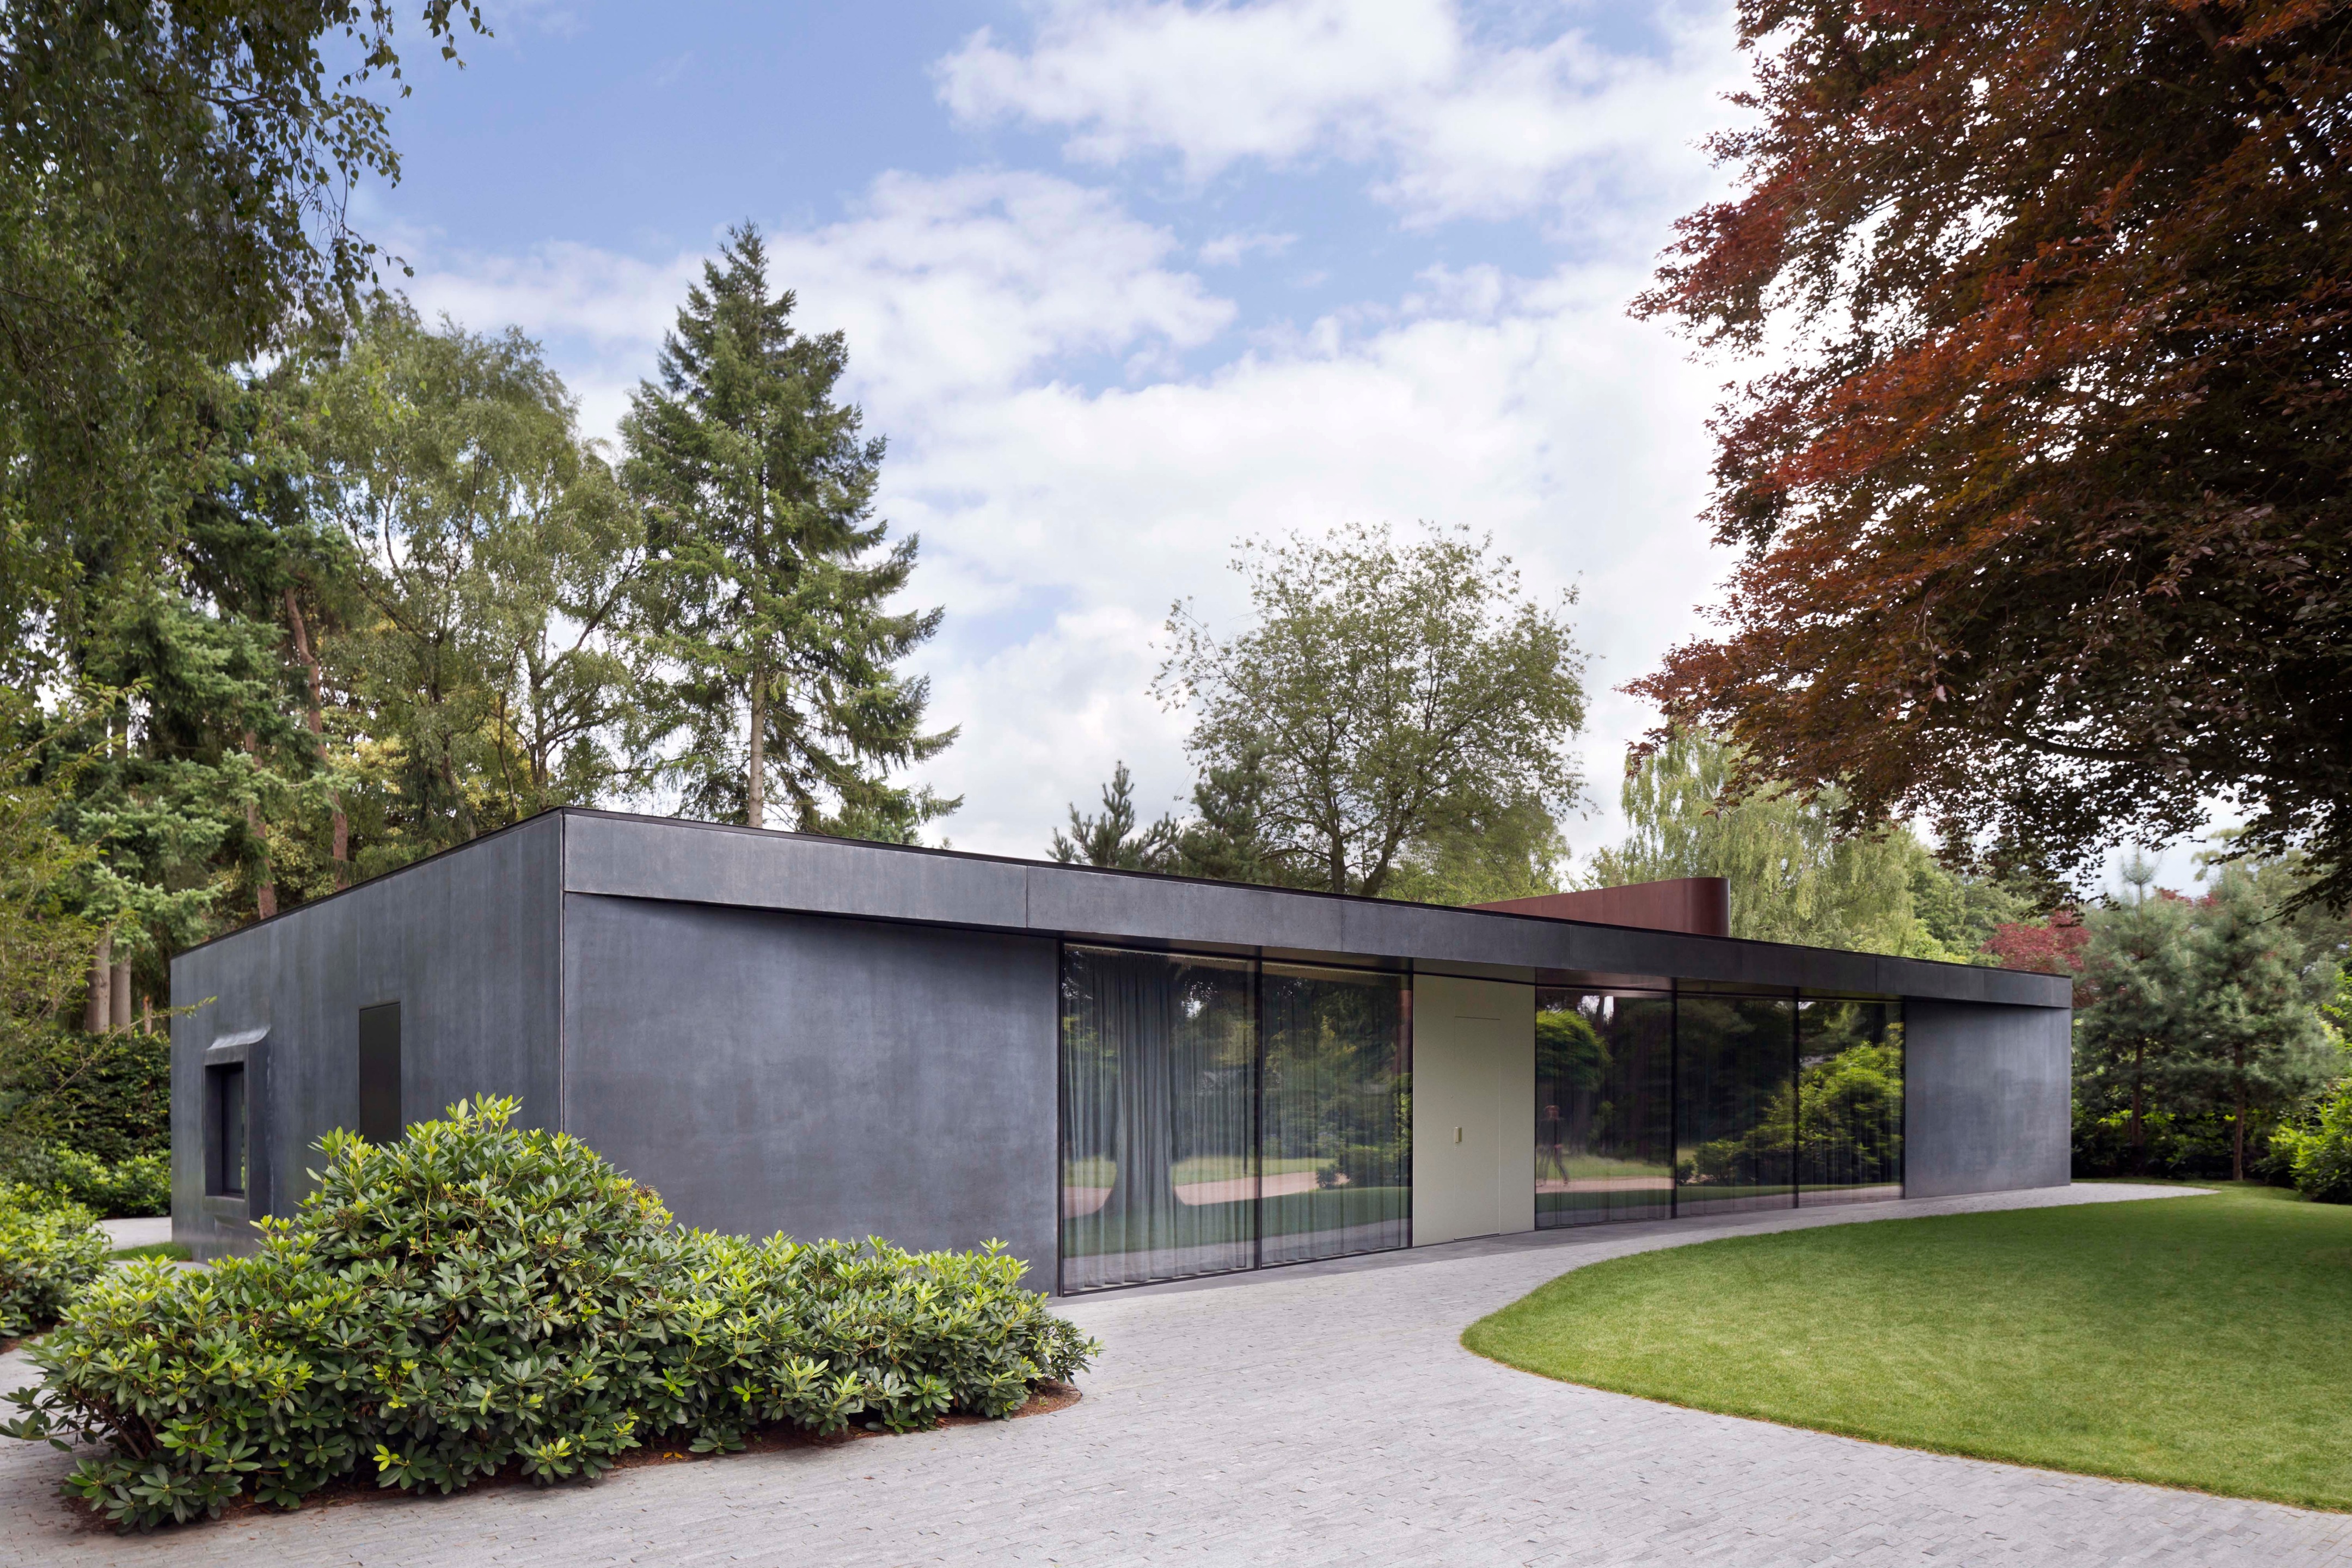 Villa X in Klein-Brabant, Netherlands by Barcode Architects